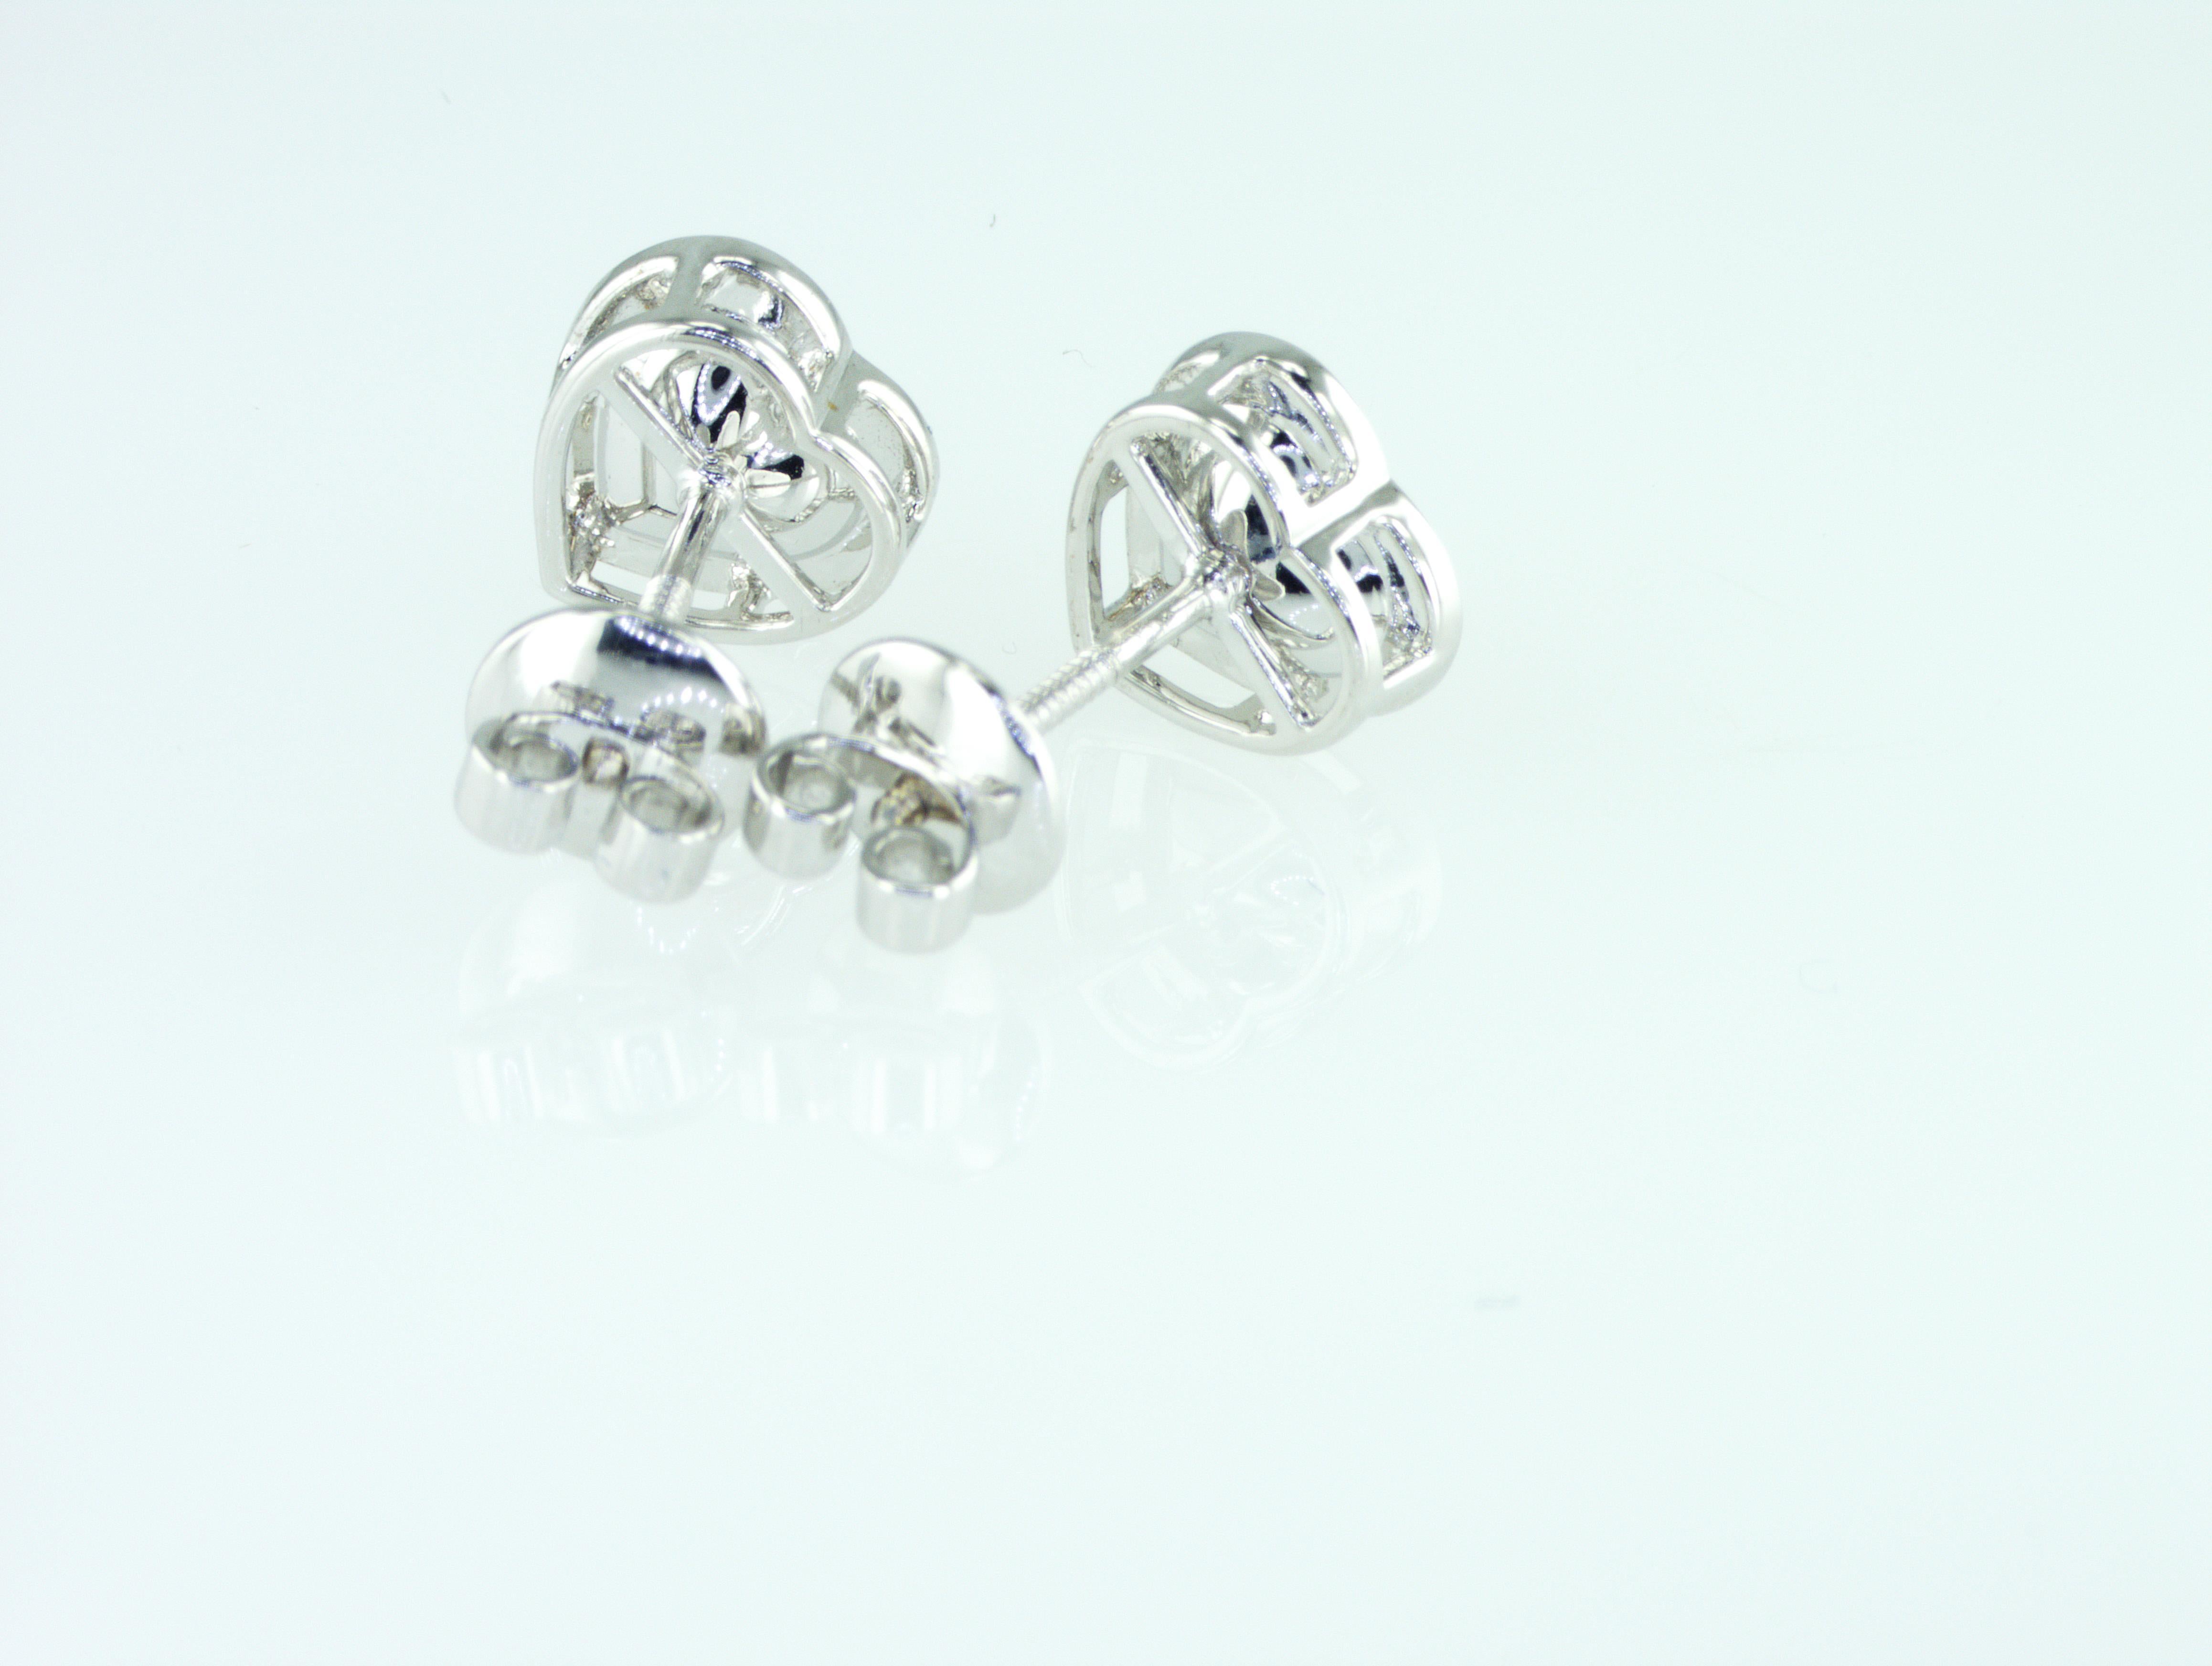 IDL certified 1.66 carat Fancy Yellow Heart shape natural diamonds Earrings In New Condition For Sale In Dubai, UAE